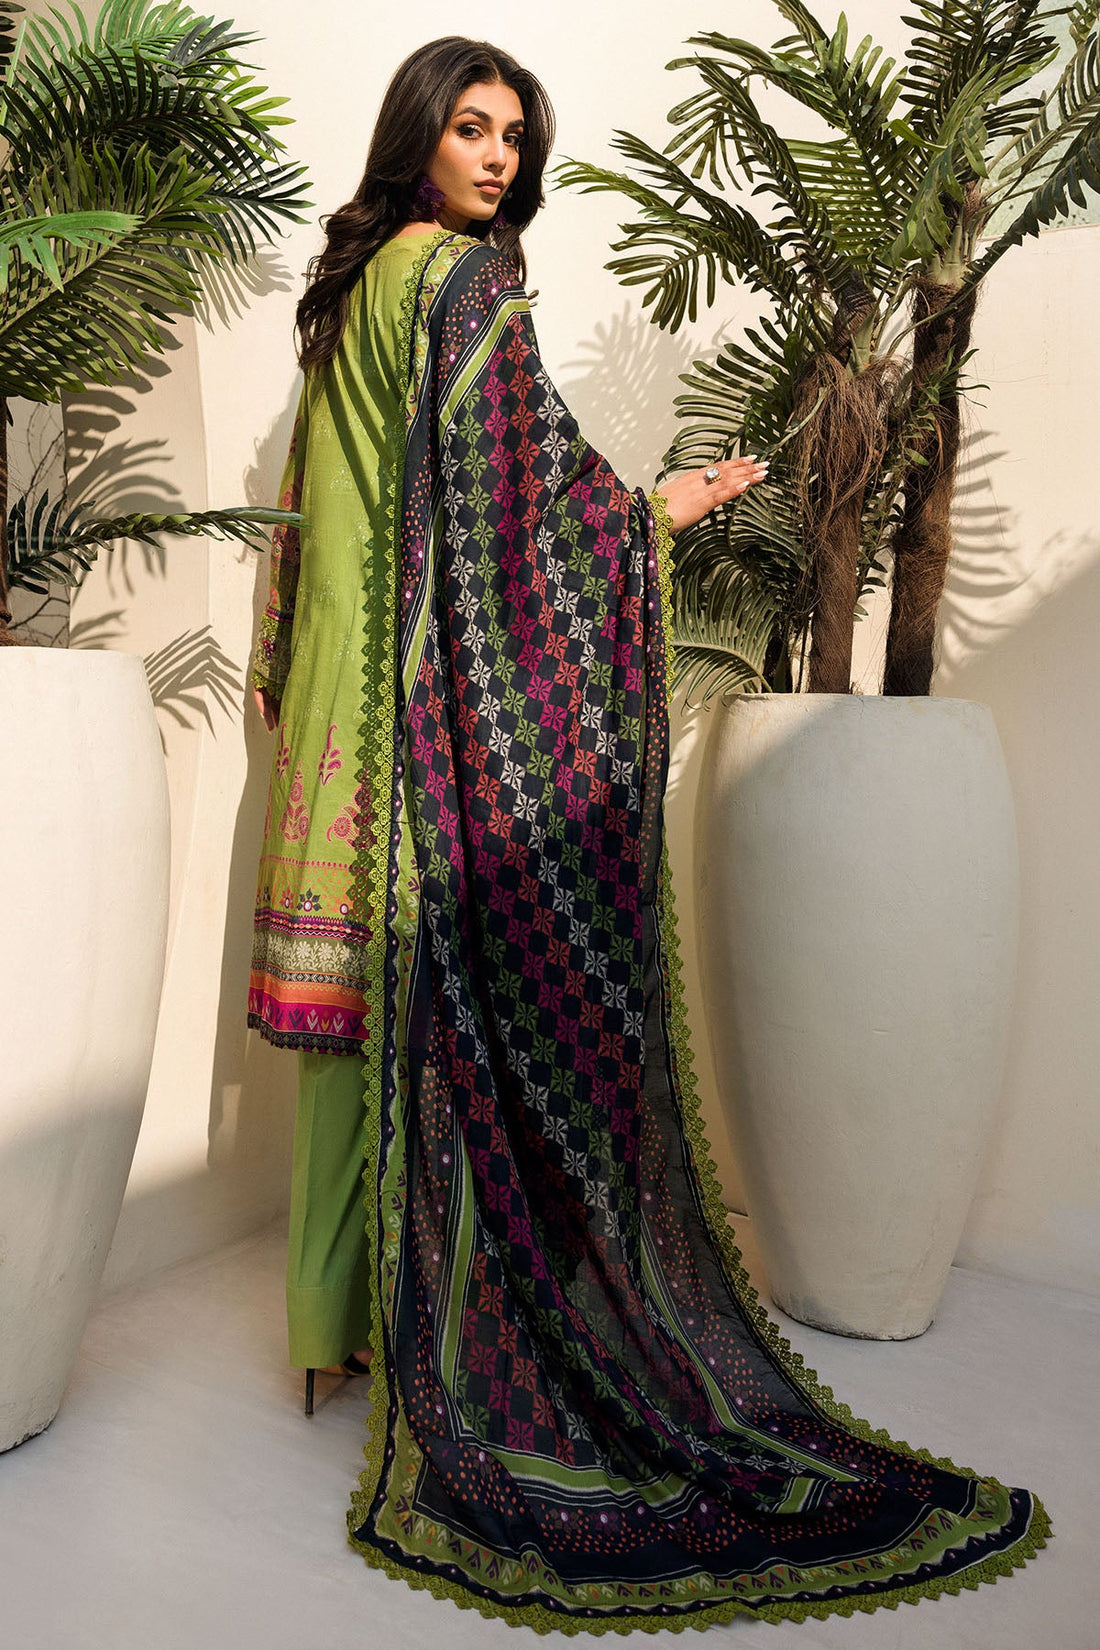 Motifz | Umang Luxury Lawn | A-12 - Khanumjan  Pakistani Clothes and Designer Dresses in UK, USA 